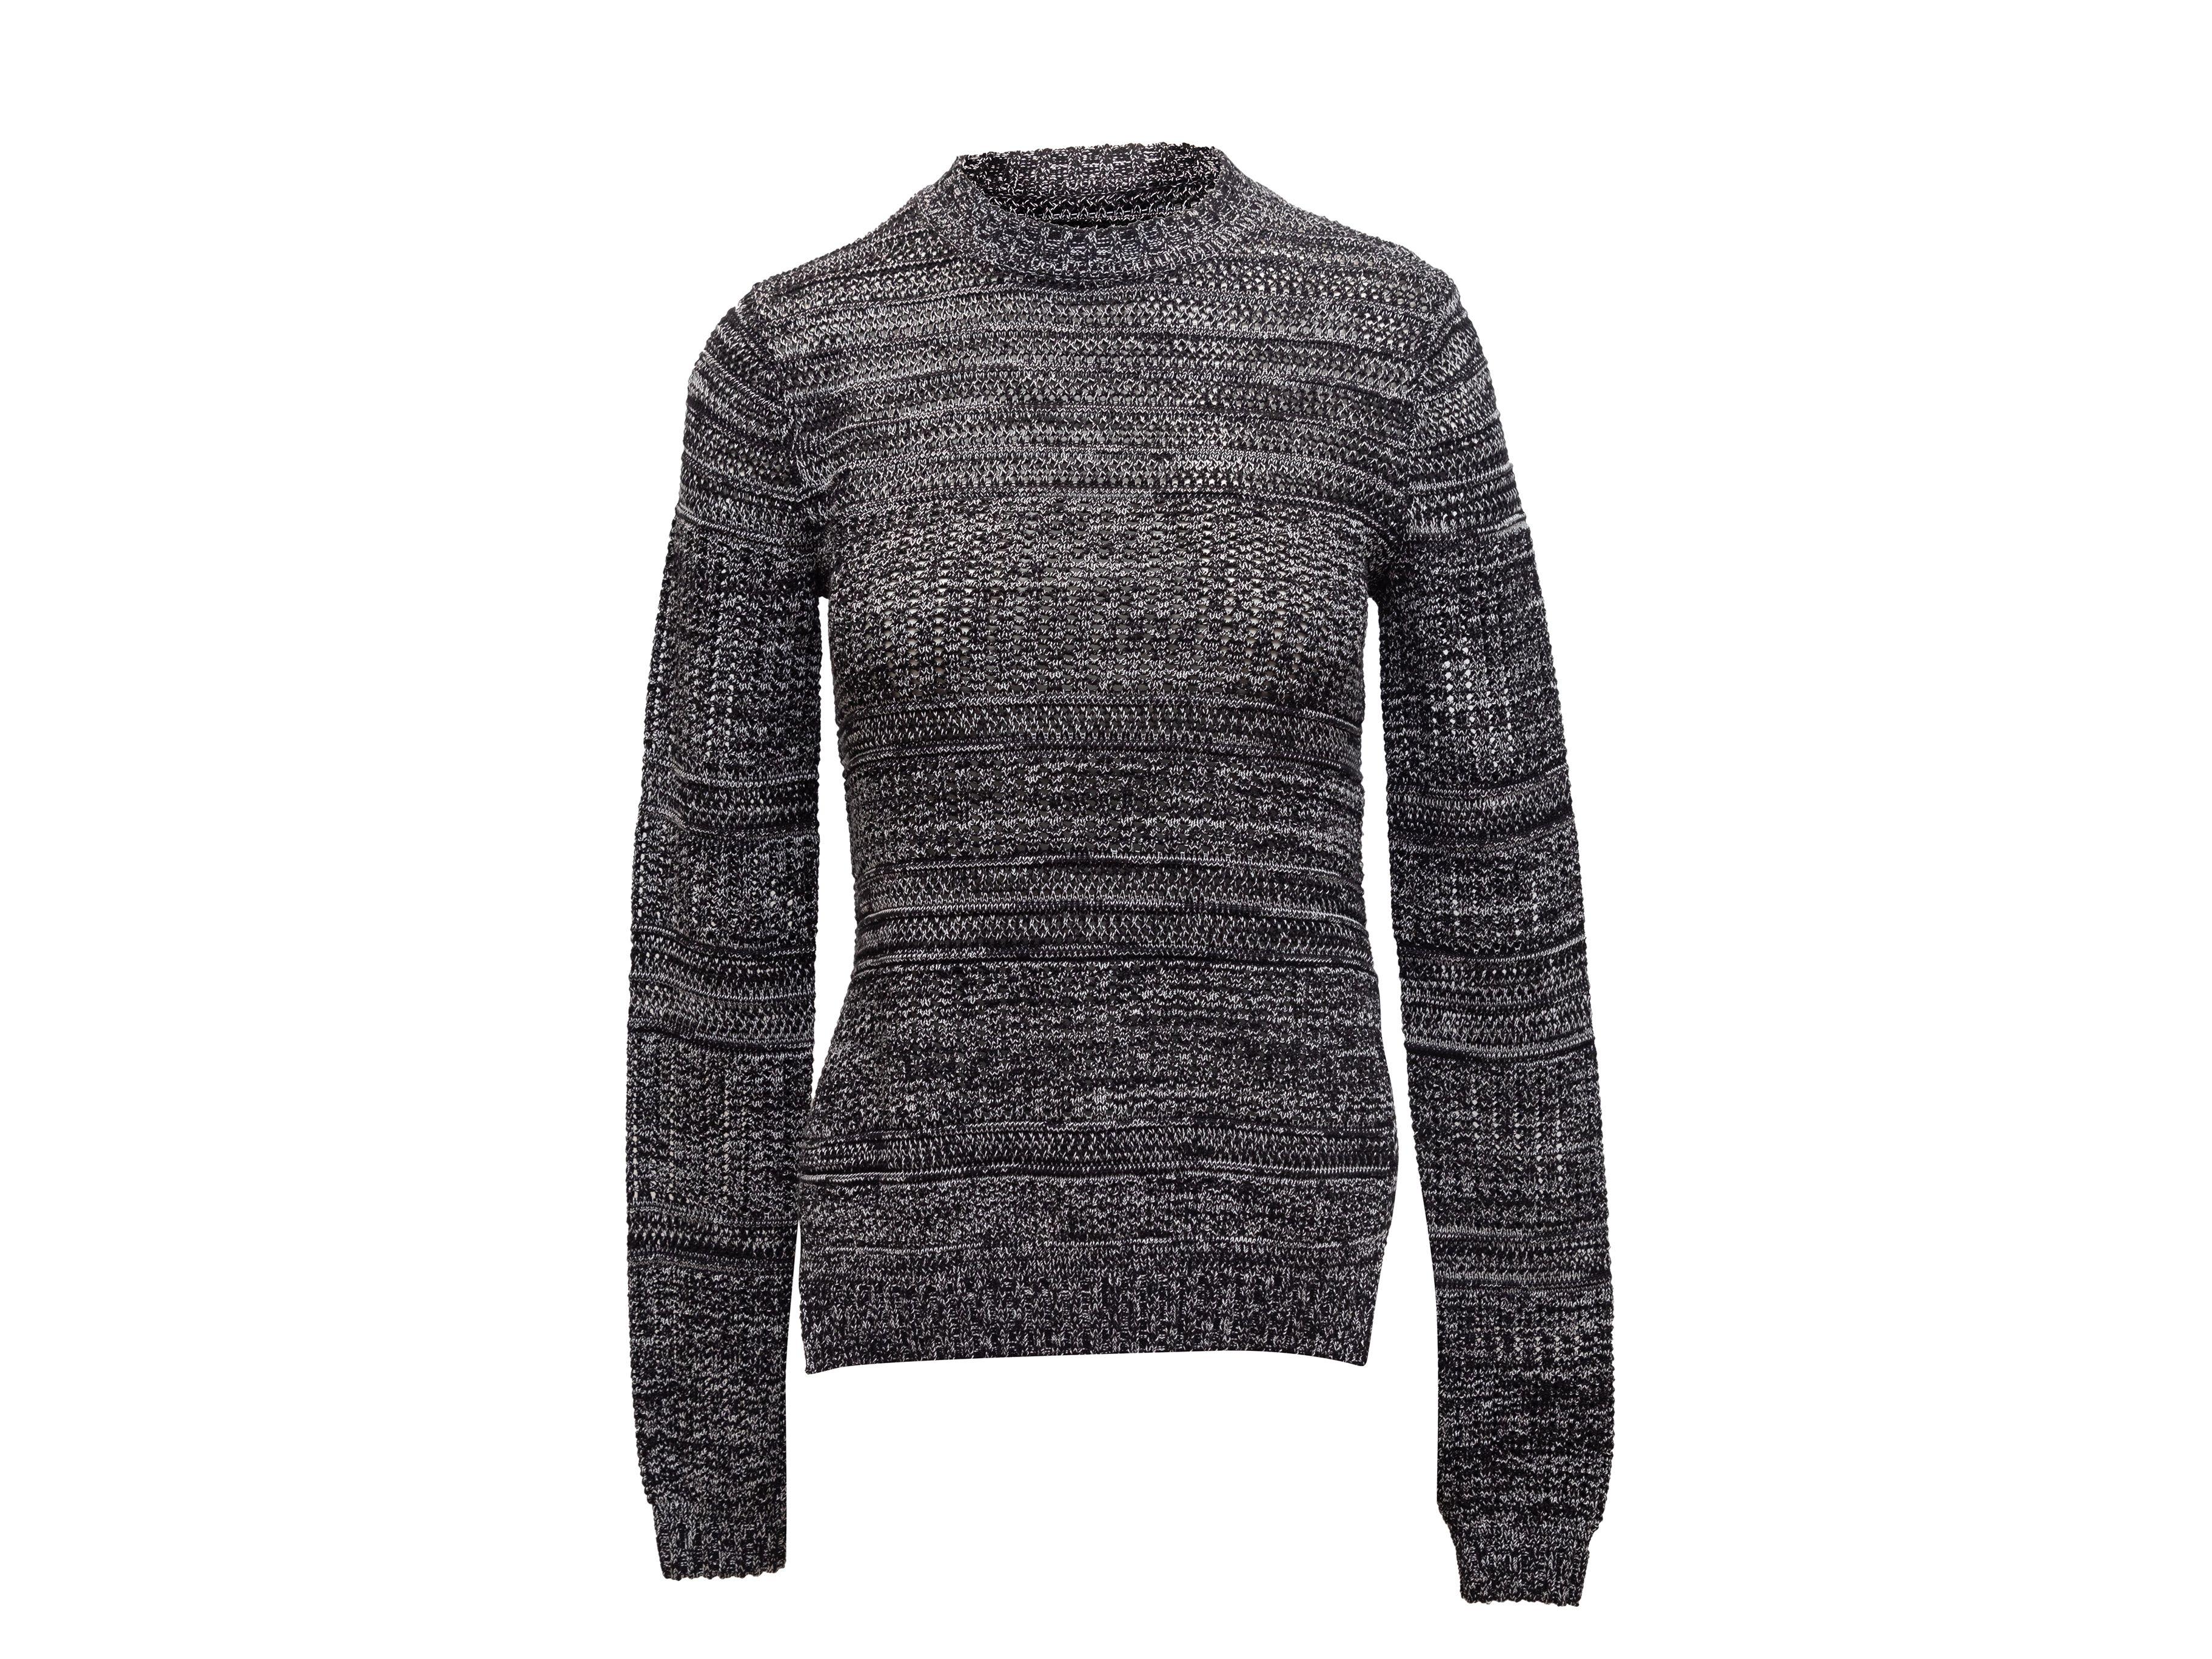 Proenza Schouler Black & White Silk-Blend Melange Sweater 1